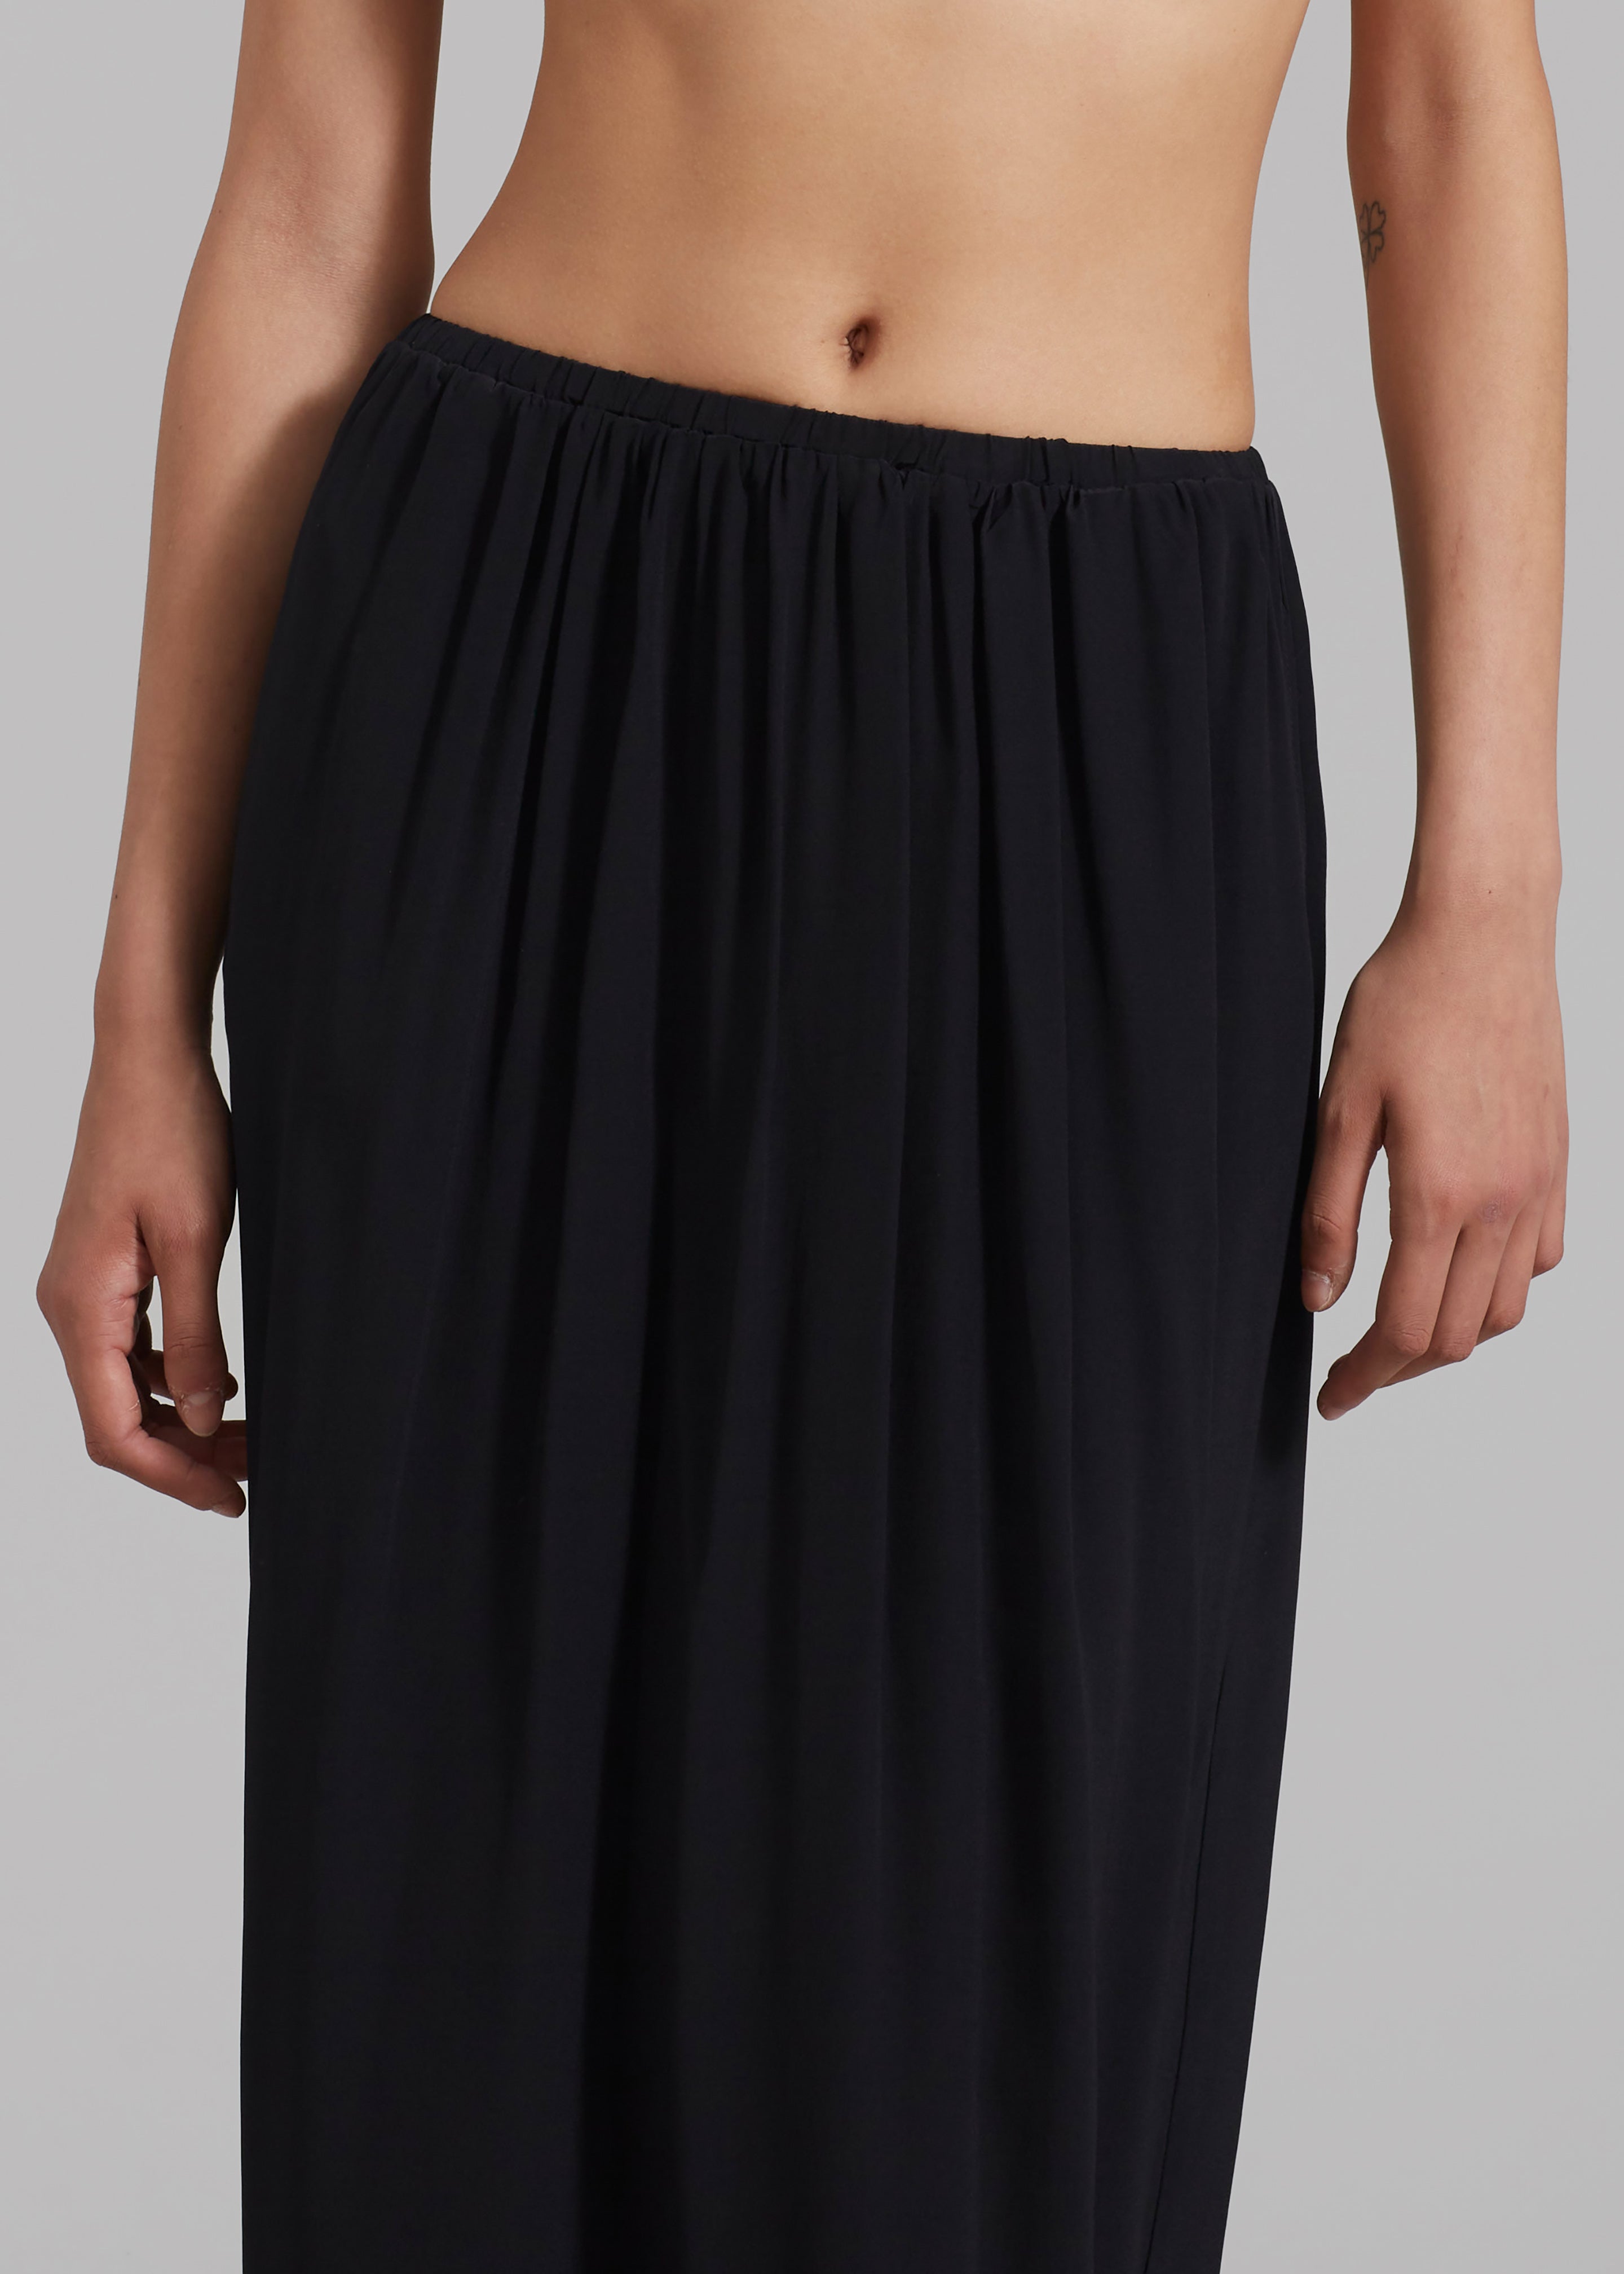 Beare Park Silk Elastic Waist Skirt - Black - 7